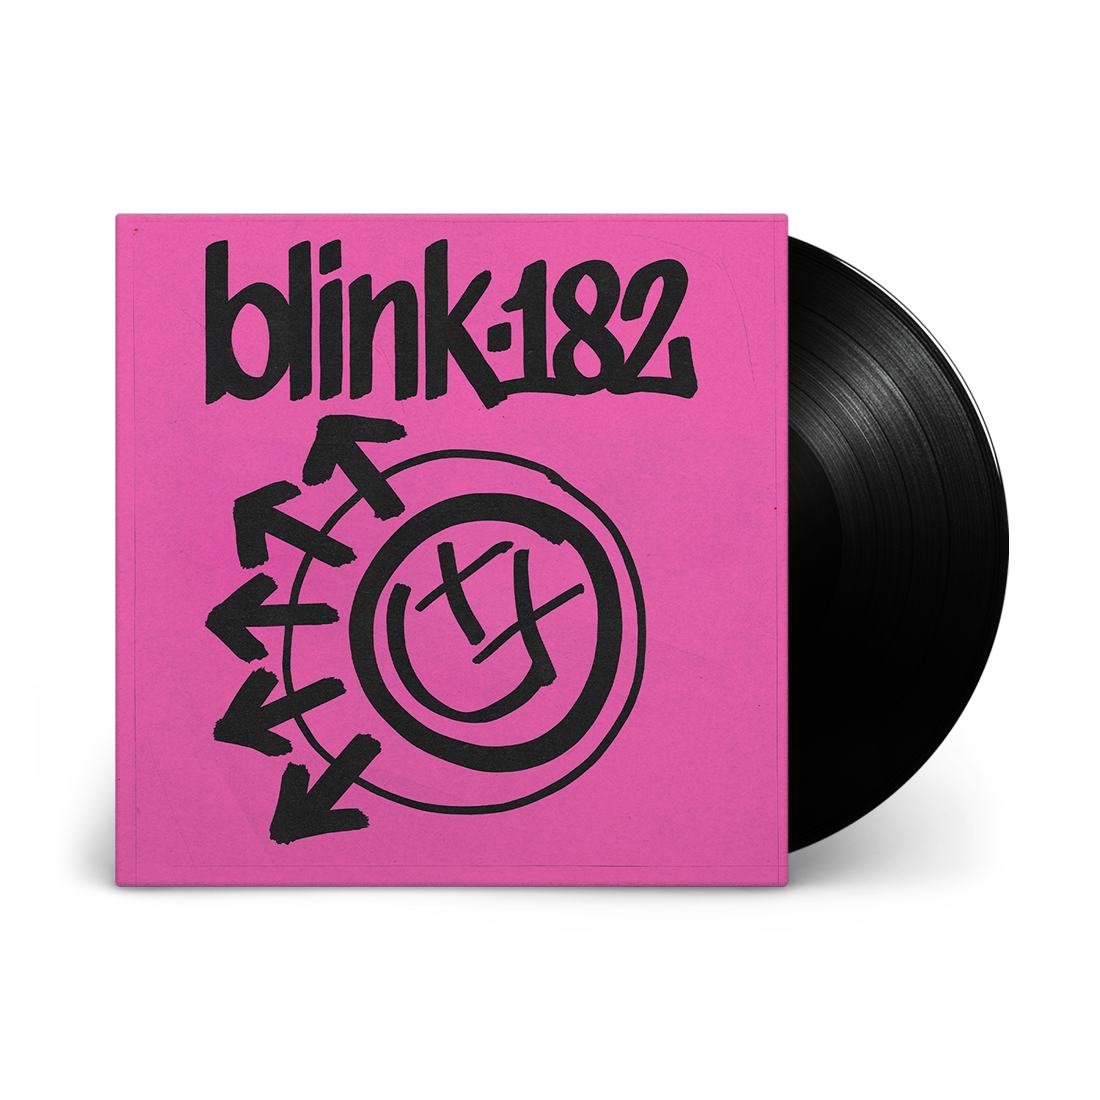 blink-182 - One More Time: Vinyl LP - Sound of Vinyl